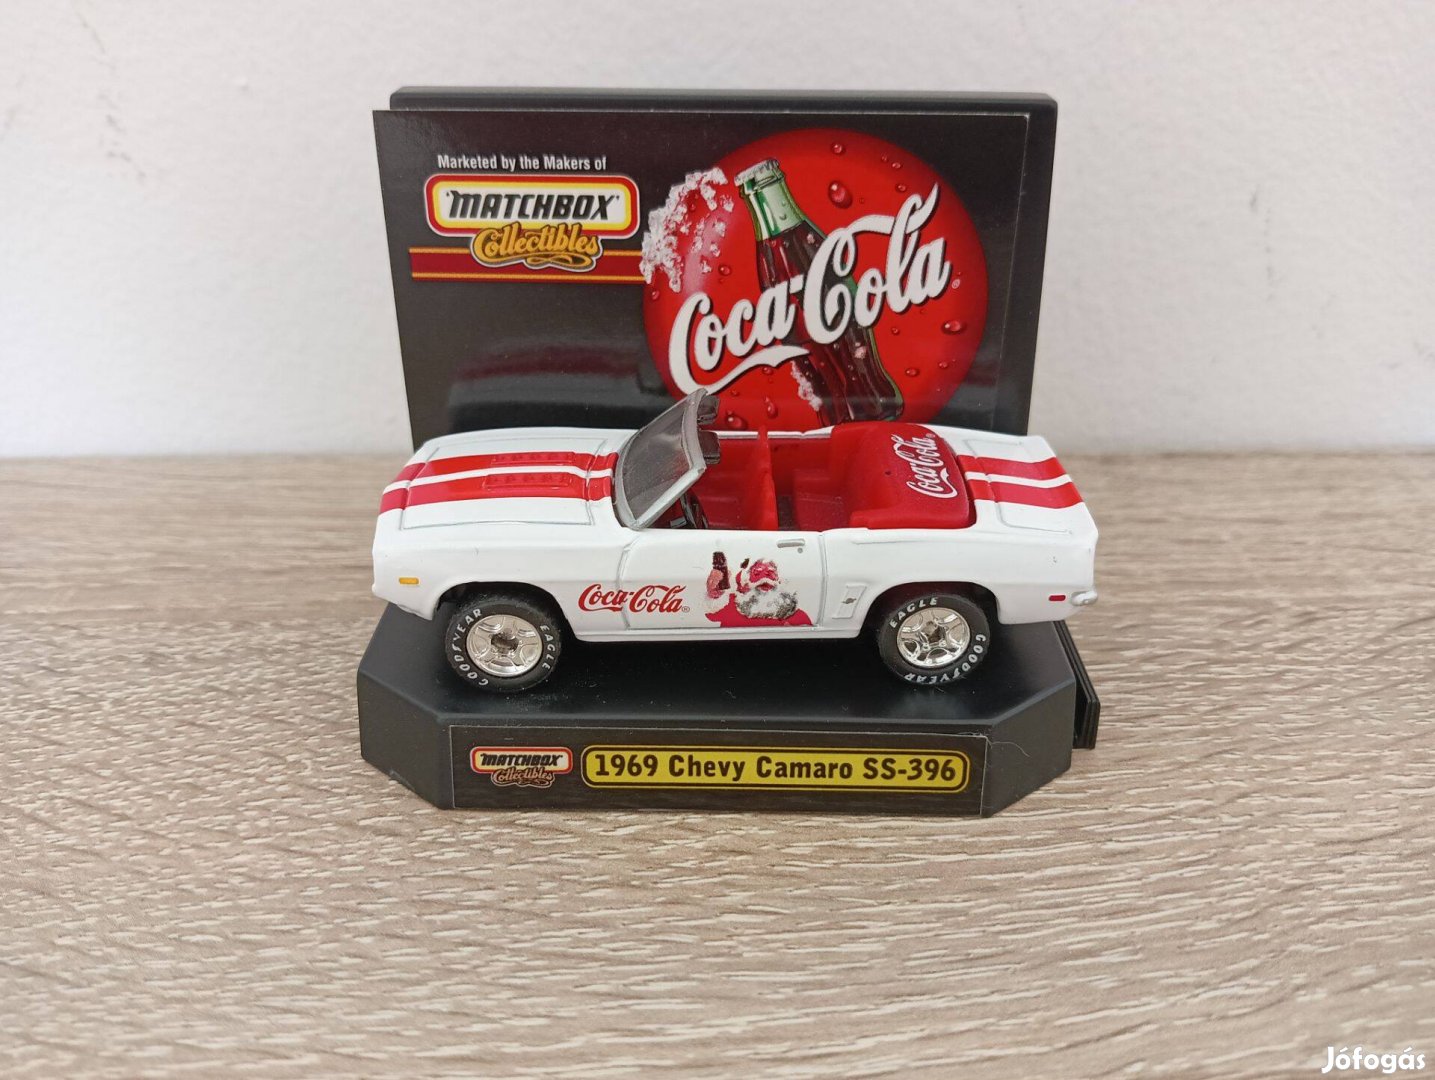 1999 matchbox Coca Cola 1969 Chevy Camaro SS-396